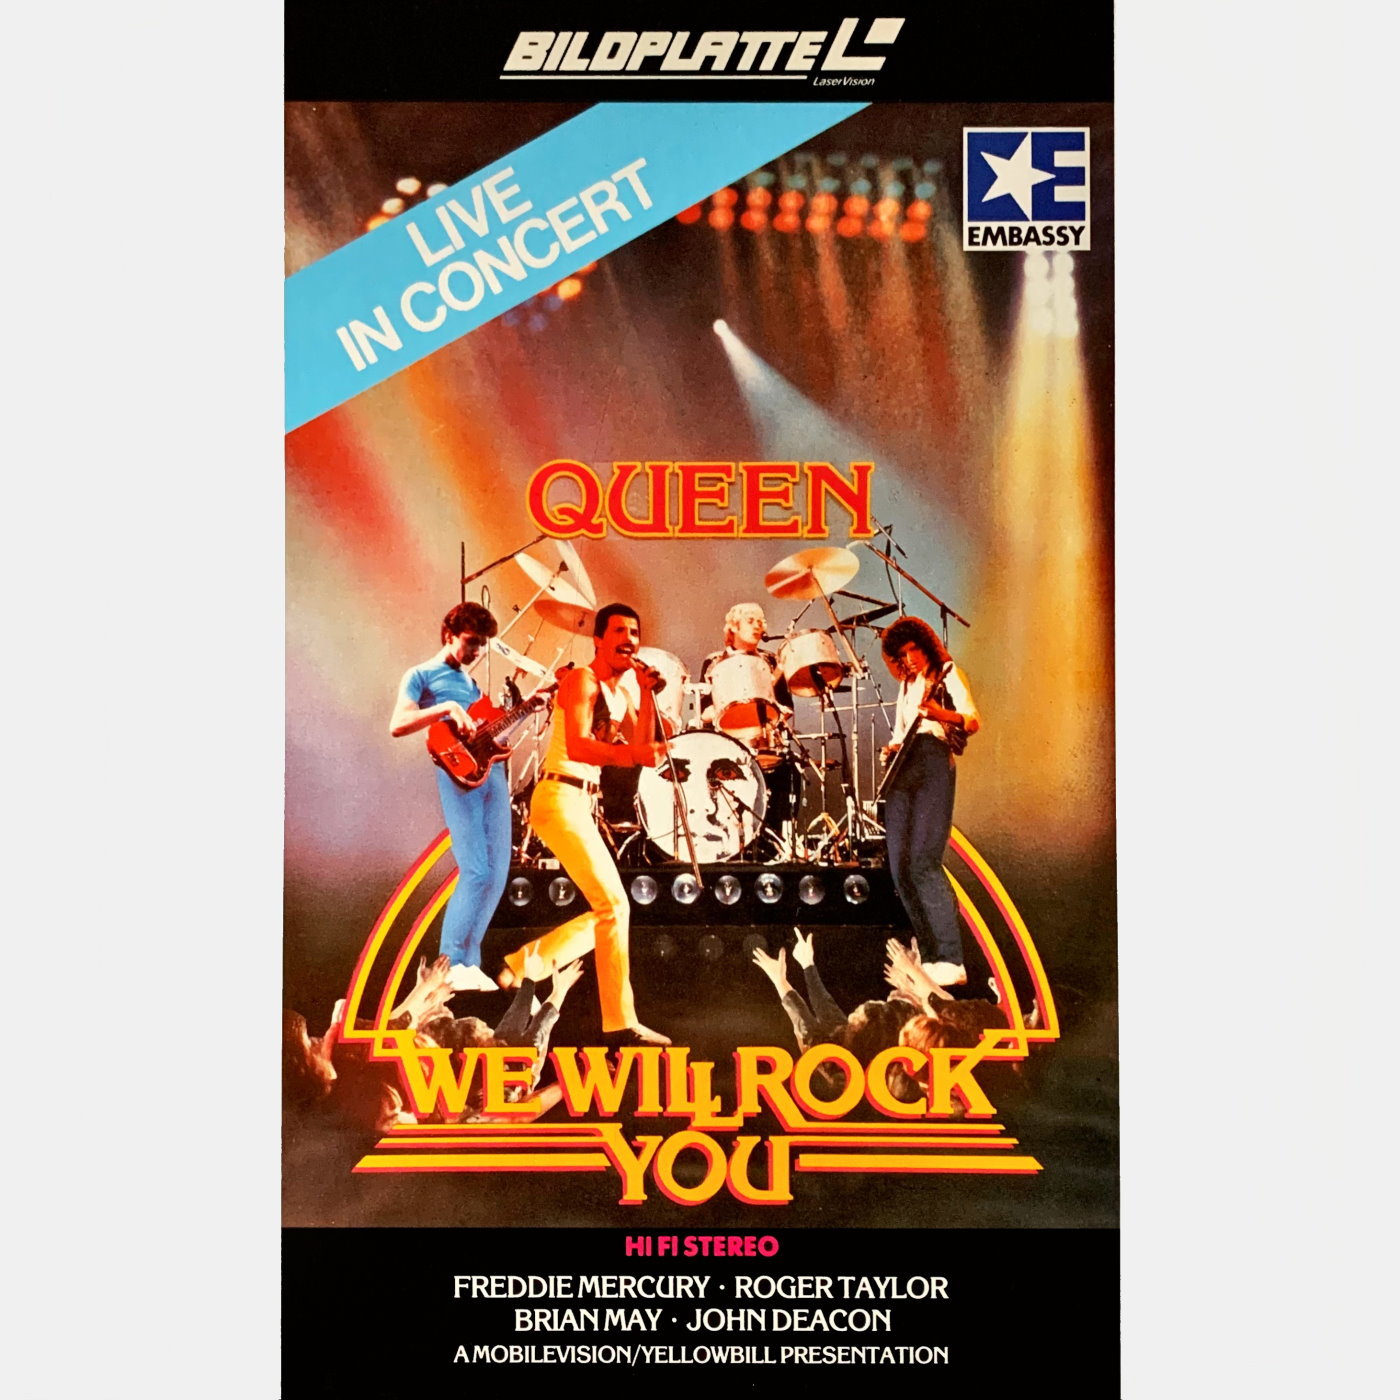 Cover - Queen - We Will Rock You.jpg